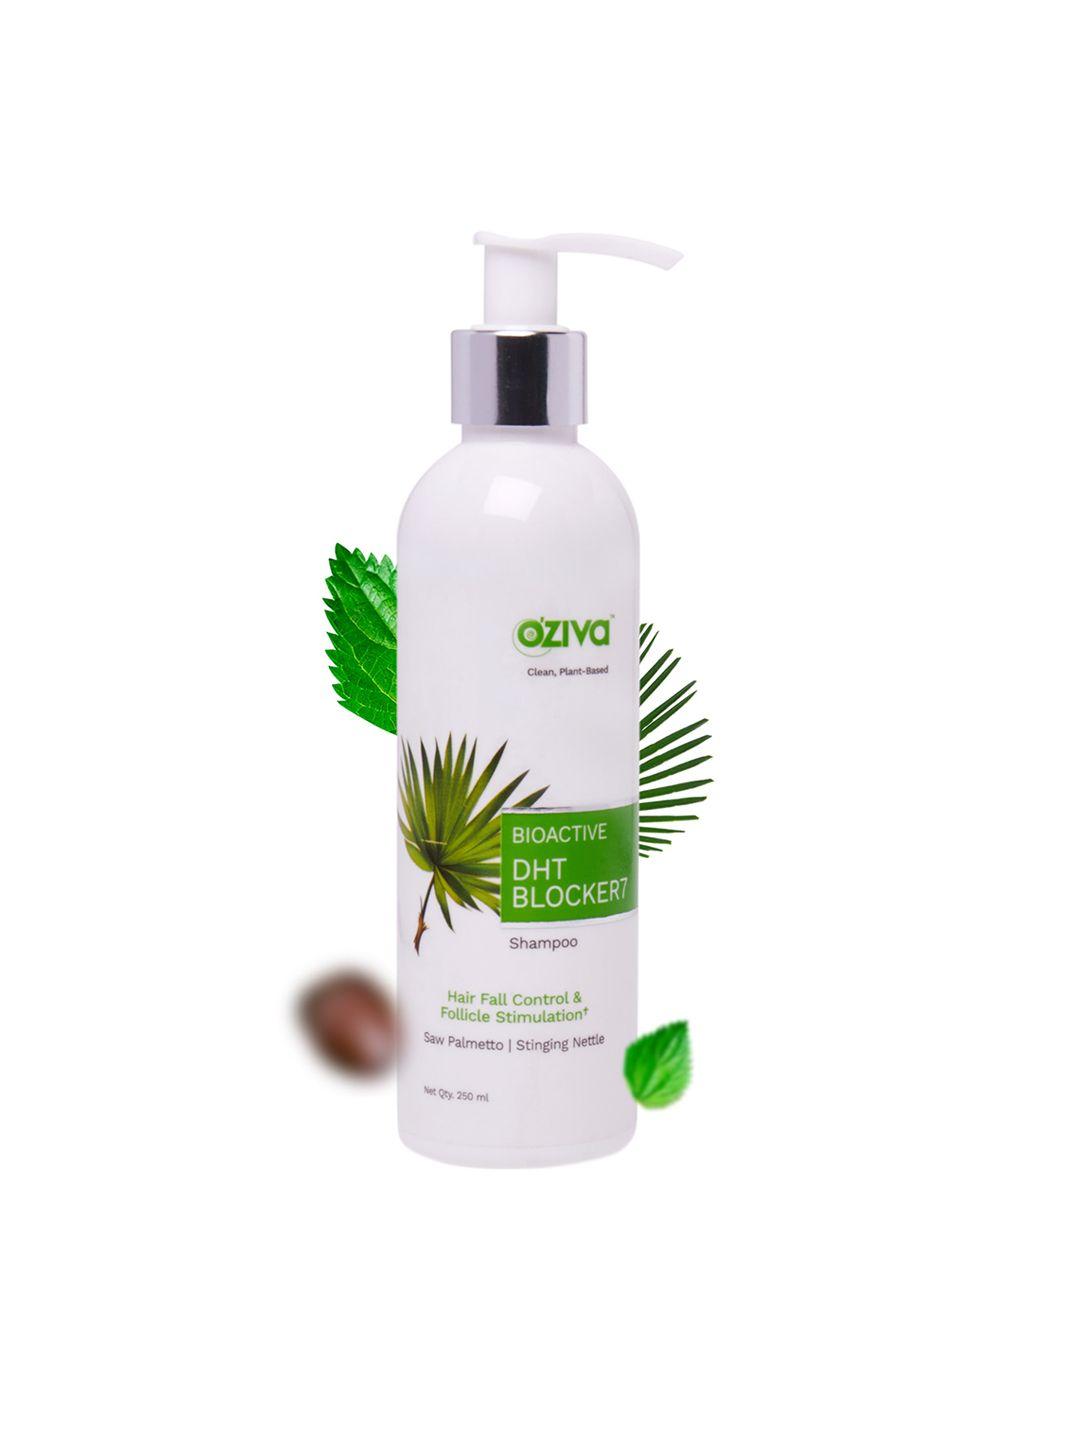 oziva-bioactive-dht-blocker7-shampoo-250ml